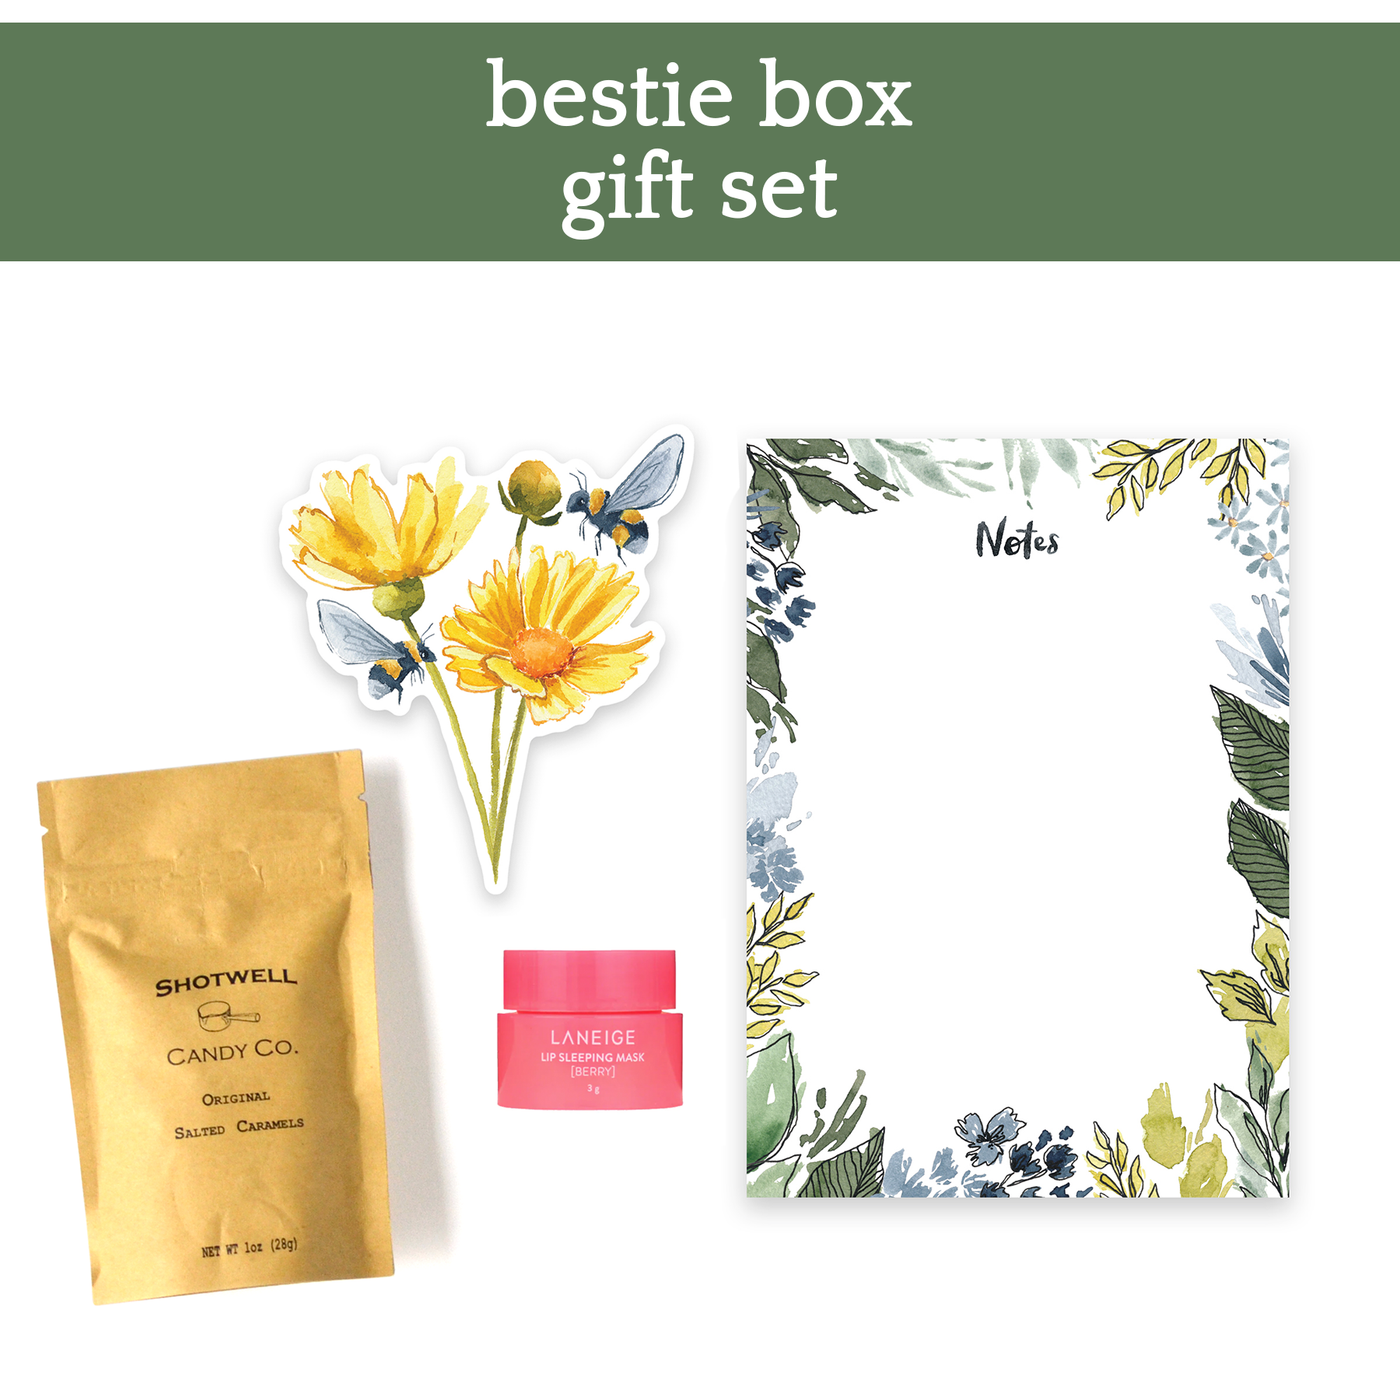 bestie box gift set